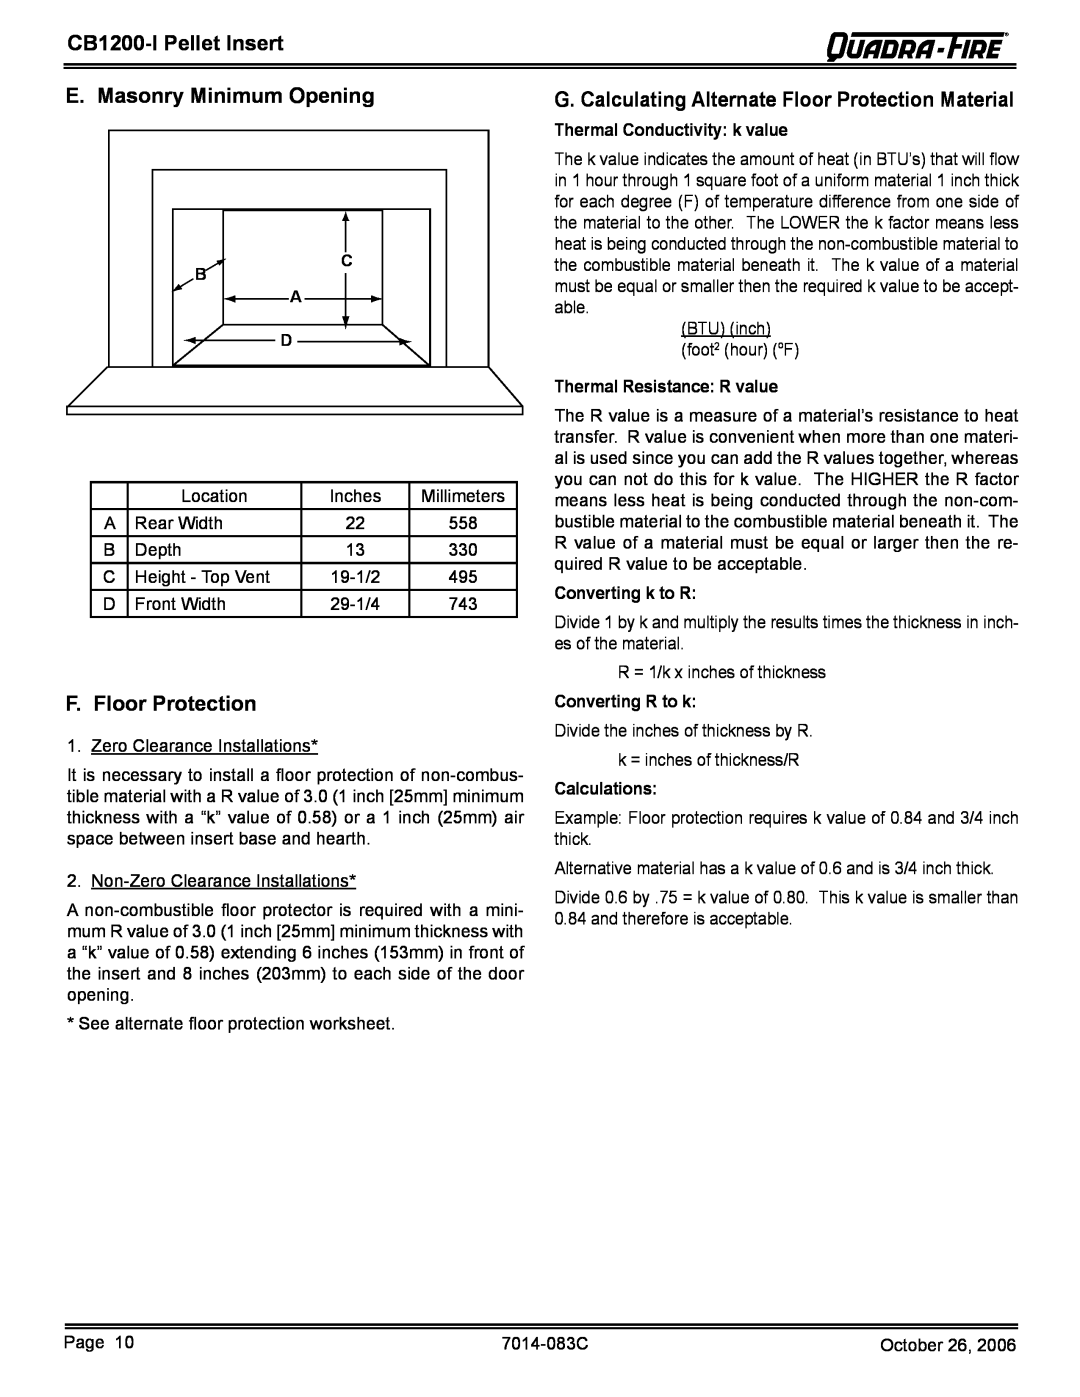 Quadra-Fire CB1200I-B E. Masonry Minimum Opening, F. Floor Protection, CB1200-IPellet Insert, Thermal Conductivity k value 